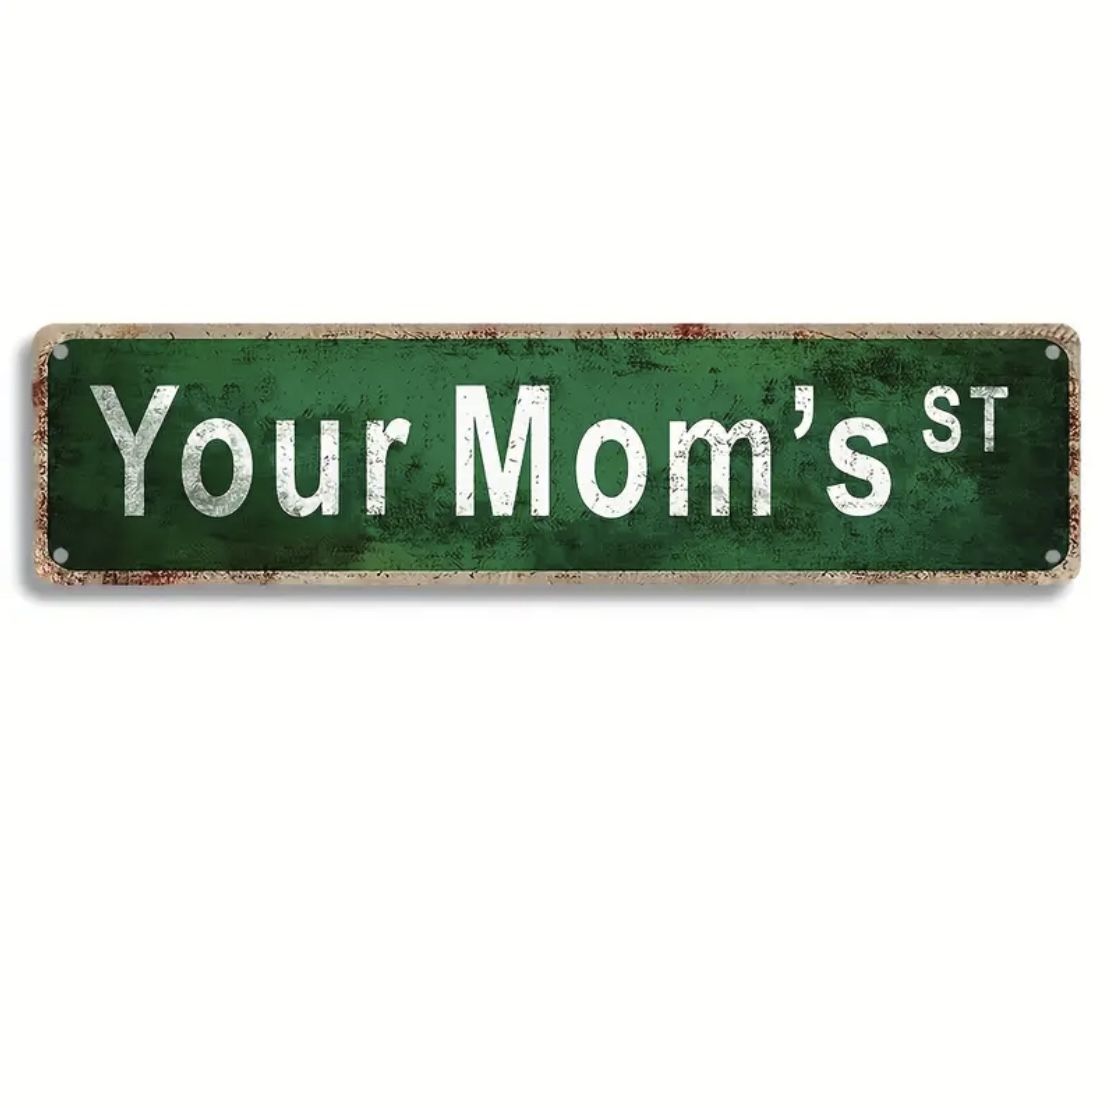 Your Mom's St Metal Tin Sign 3.75x16